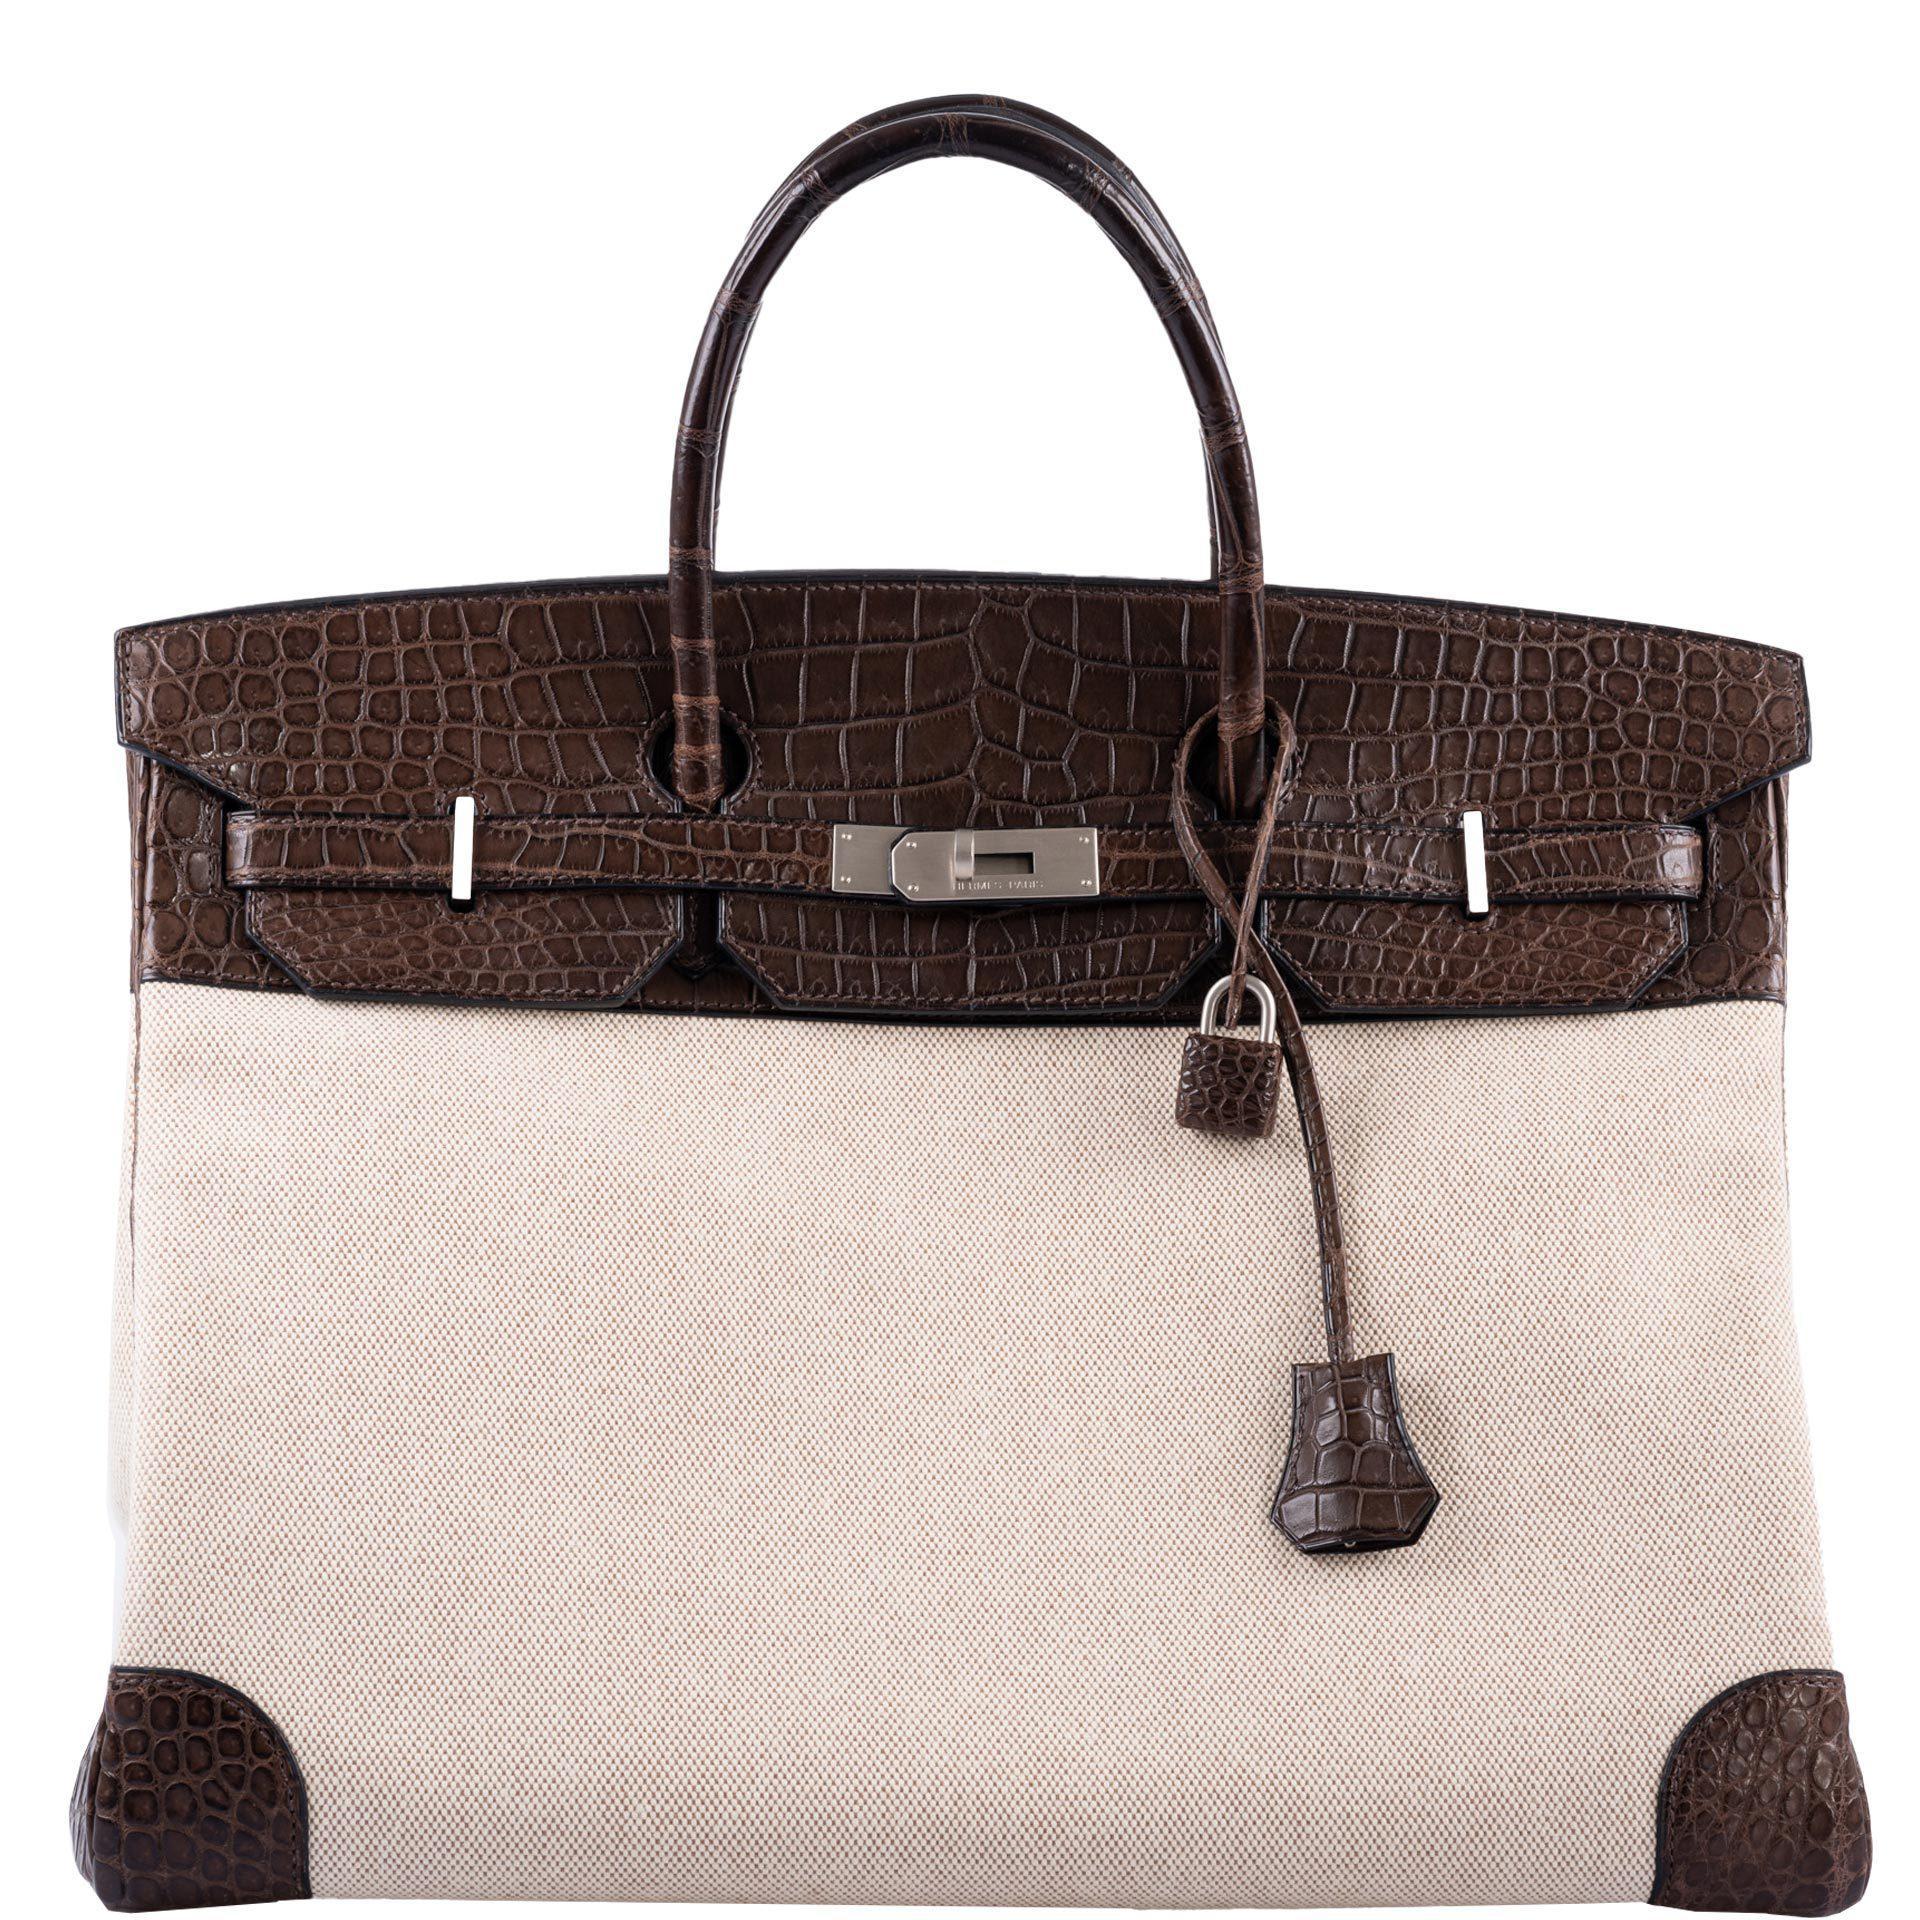 Hermes Birkin bag 40 Vert verone Togo leather Gold hardware